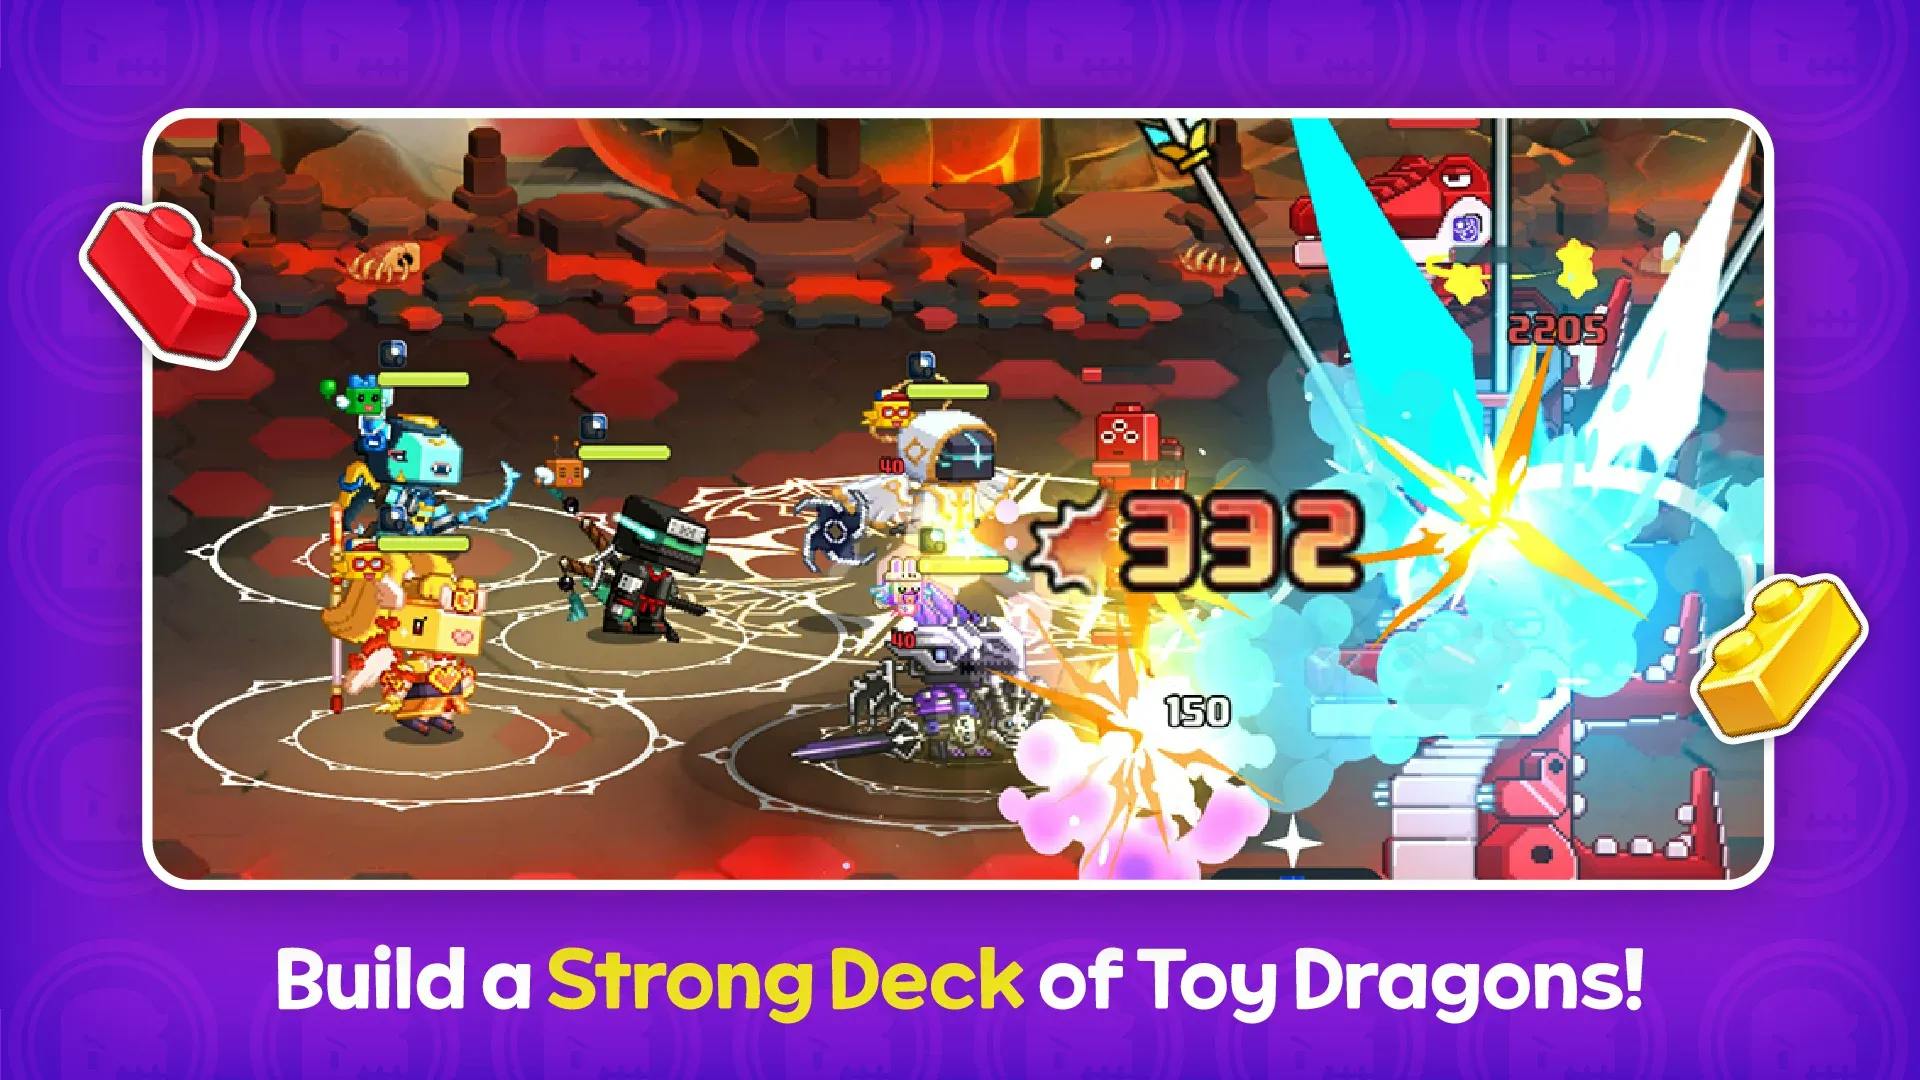 Meta Toy DragonZ SAGA  Open Beta is live🔥 on X: Hey fam! Show